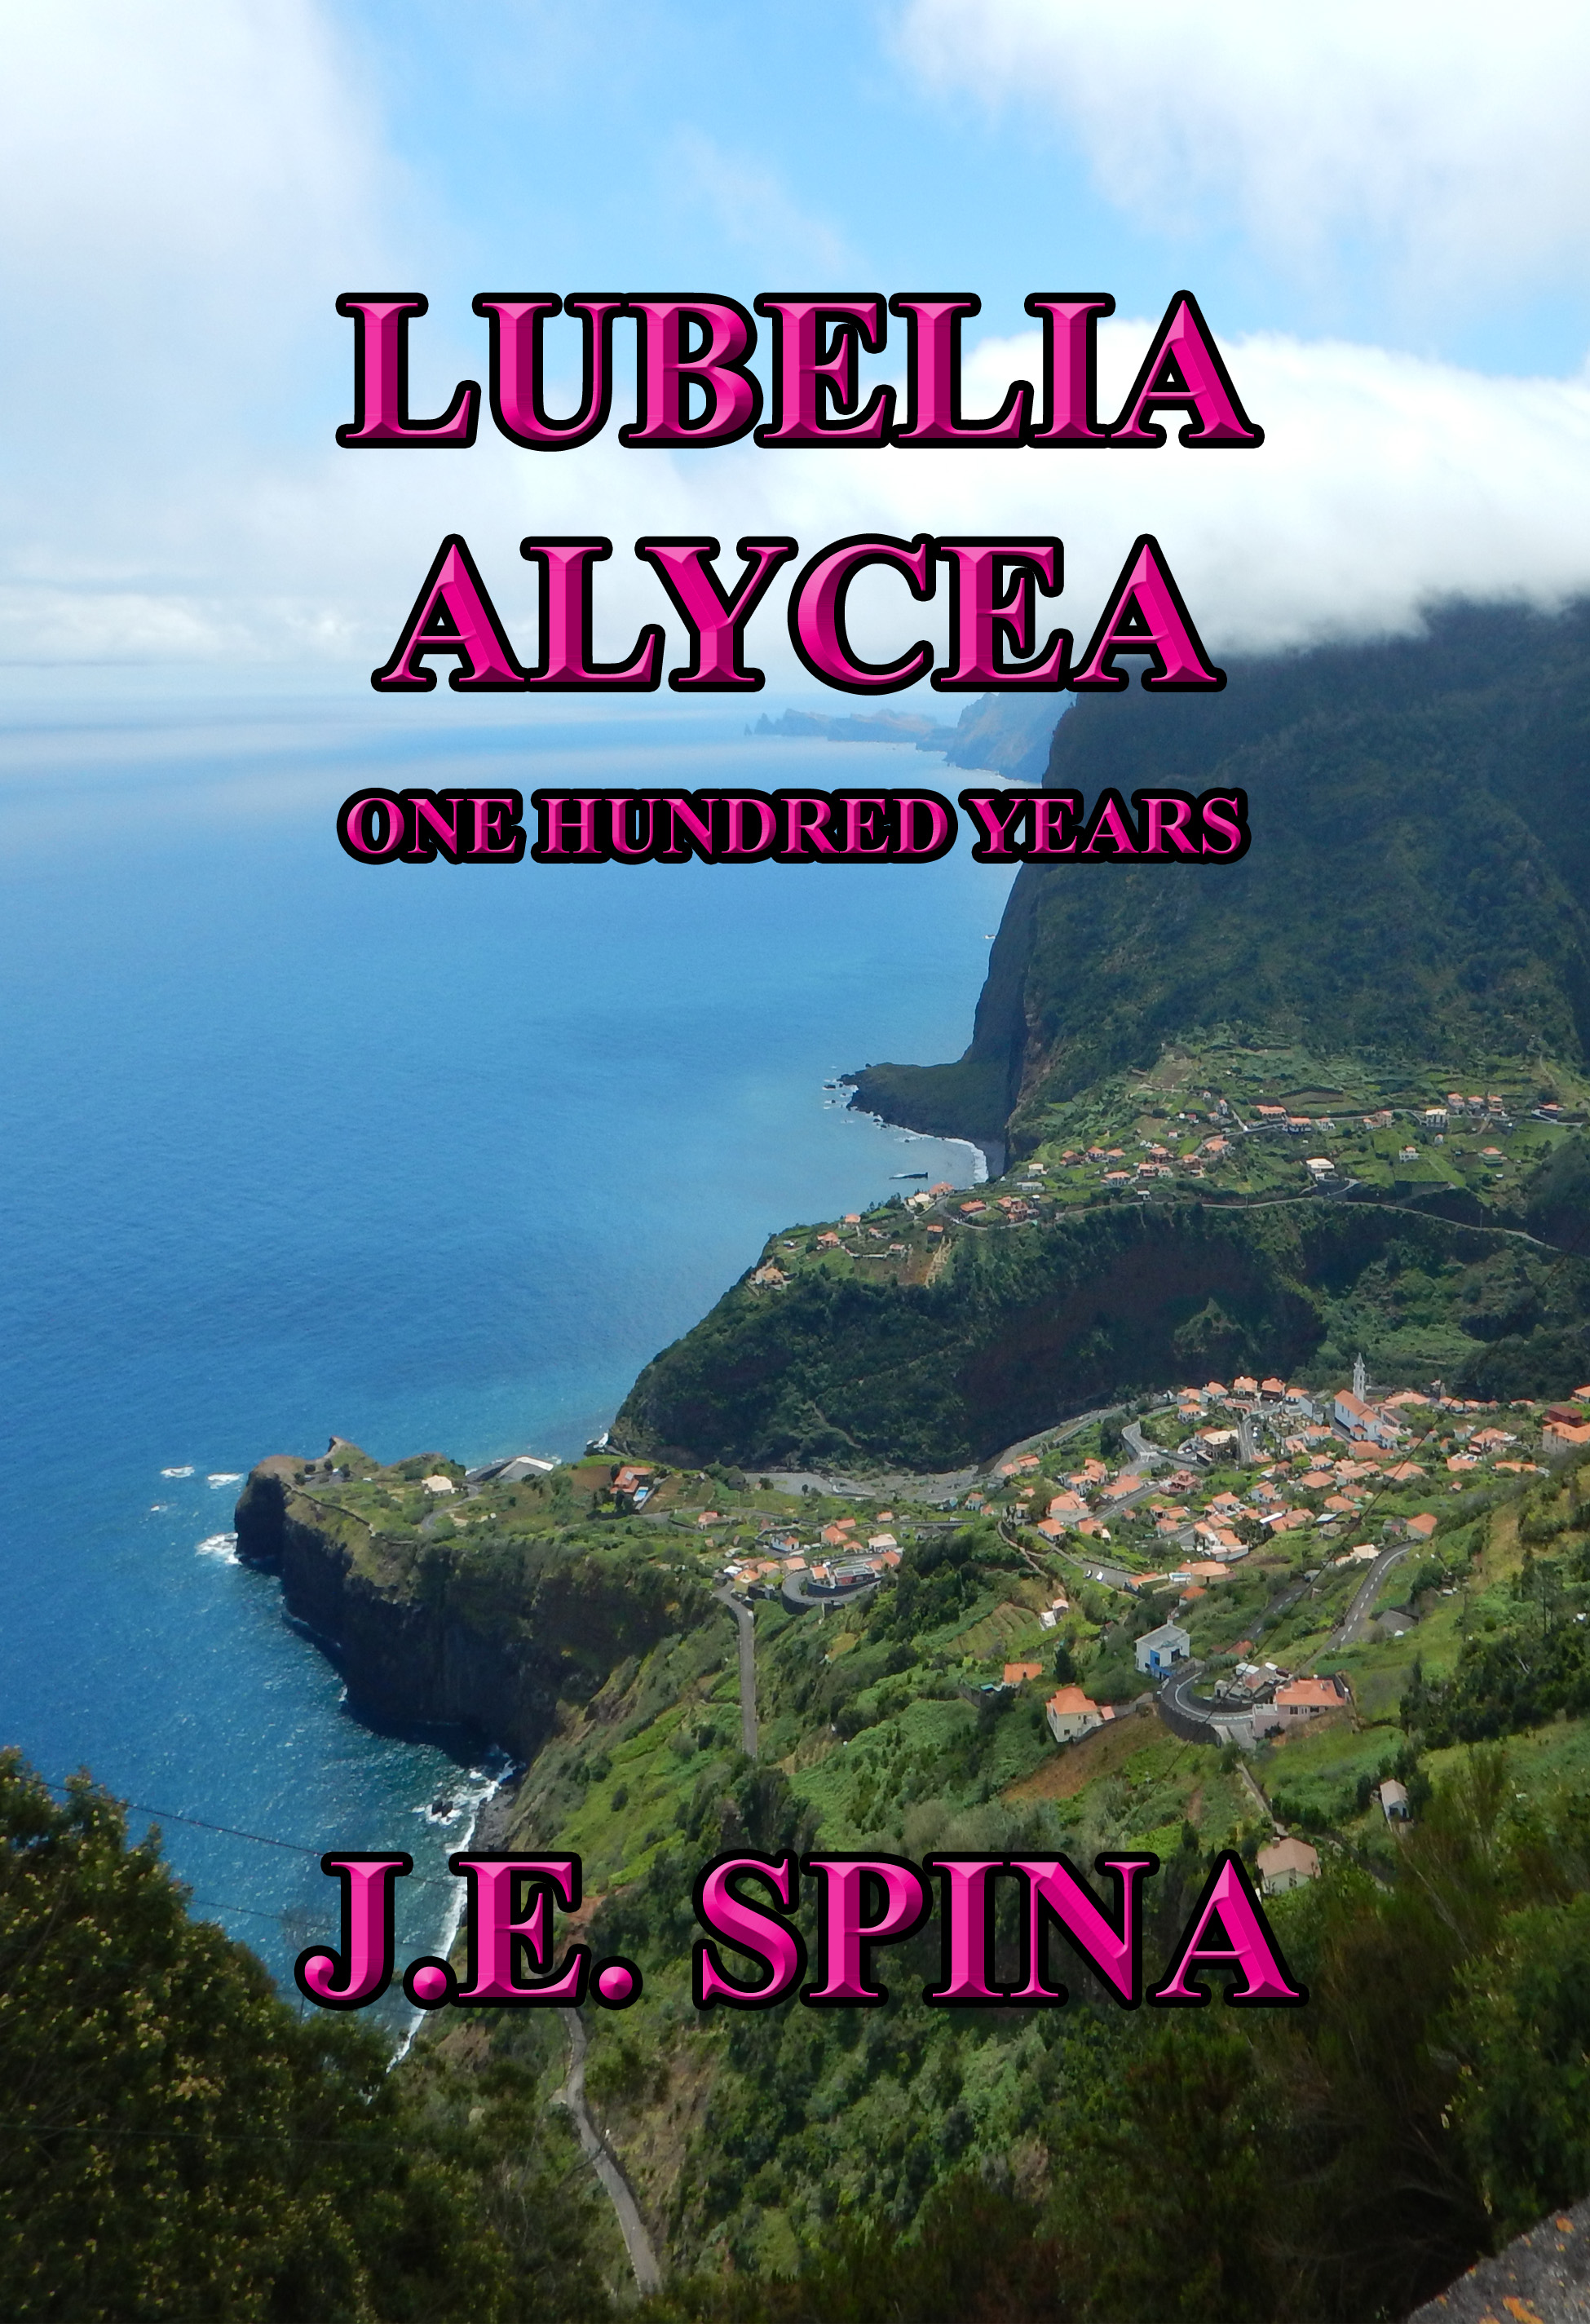 LUBELIA ALYCEA One Hundred Years